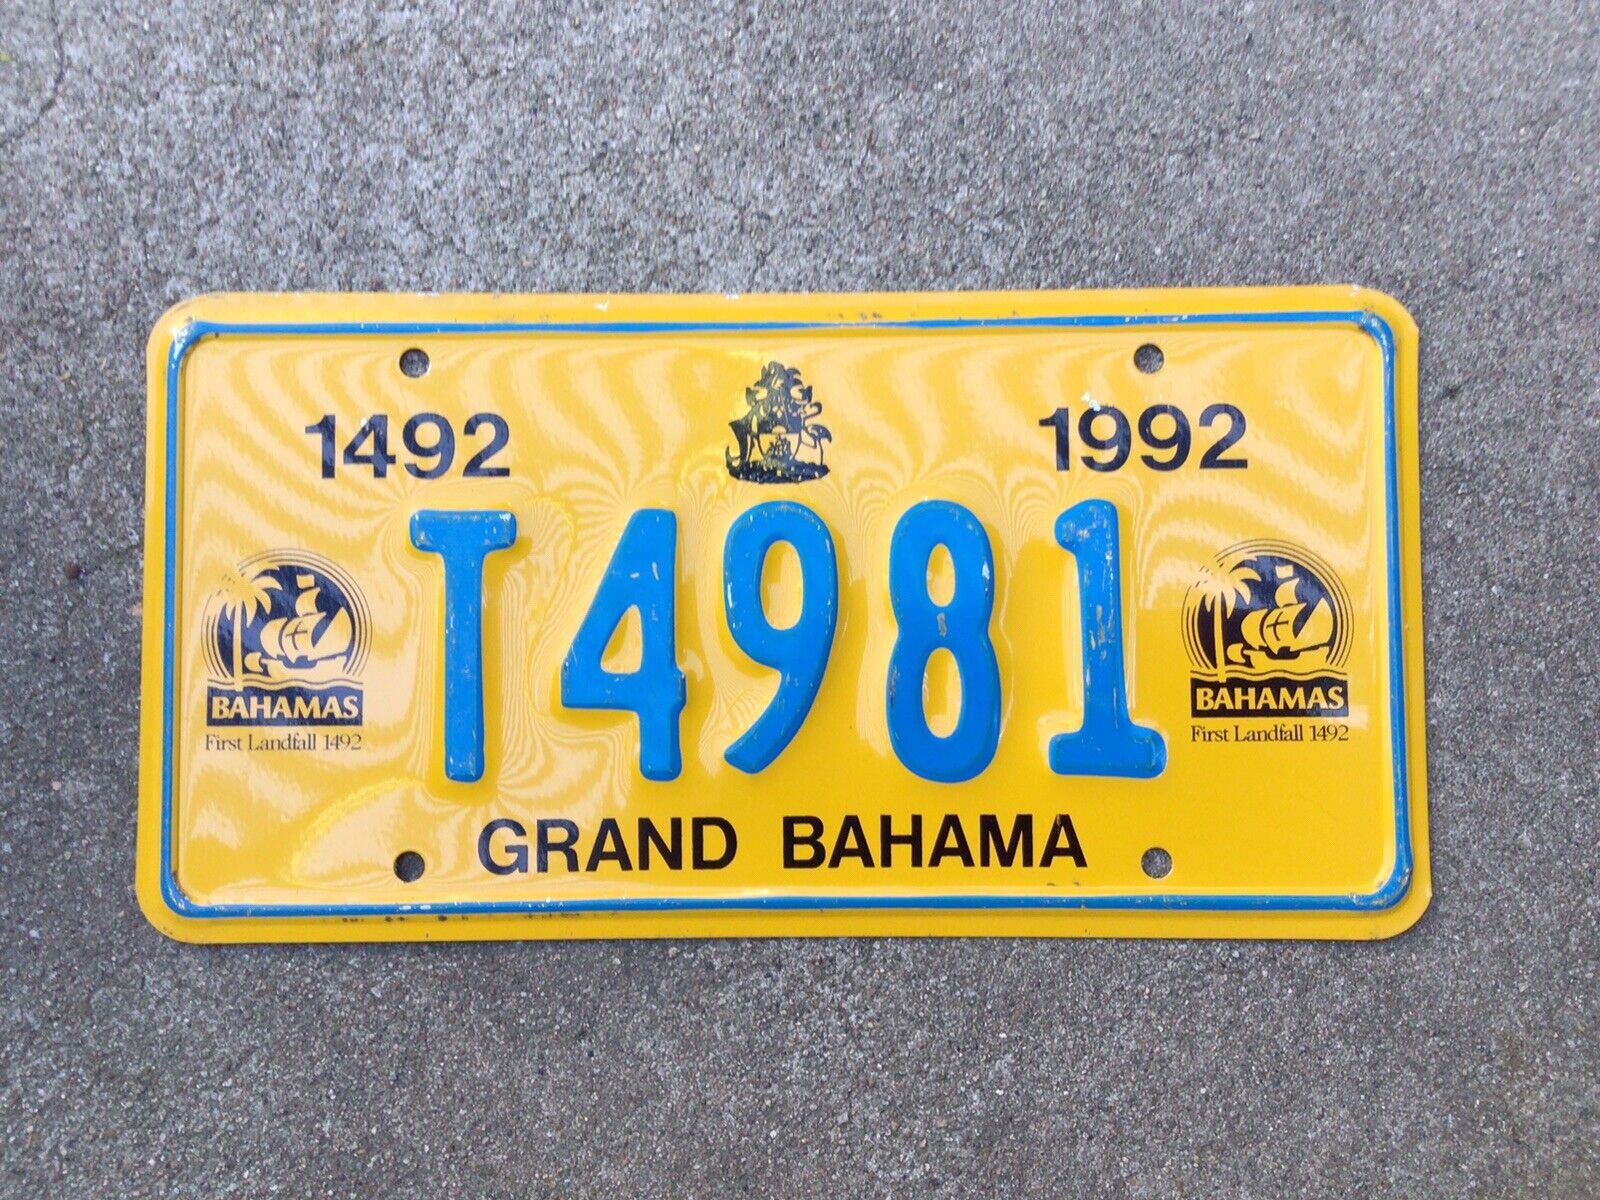 1992 - BAHAMAS - GRAND BAHAMA - LICENSE PLATE